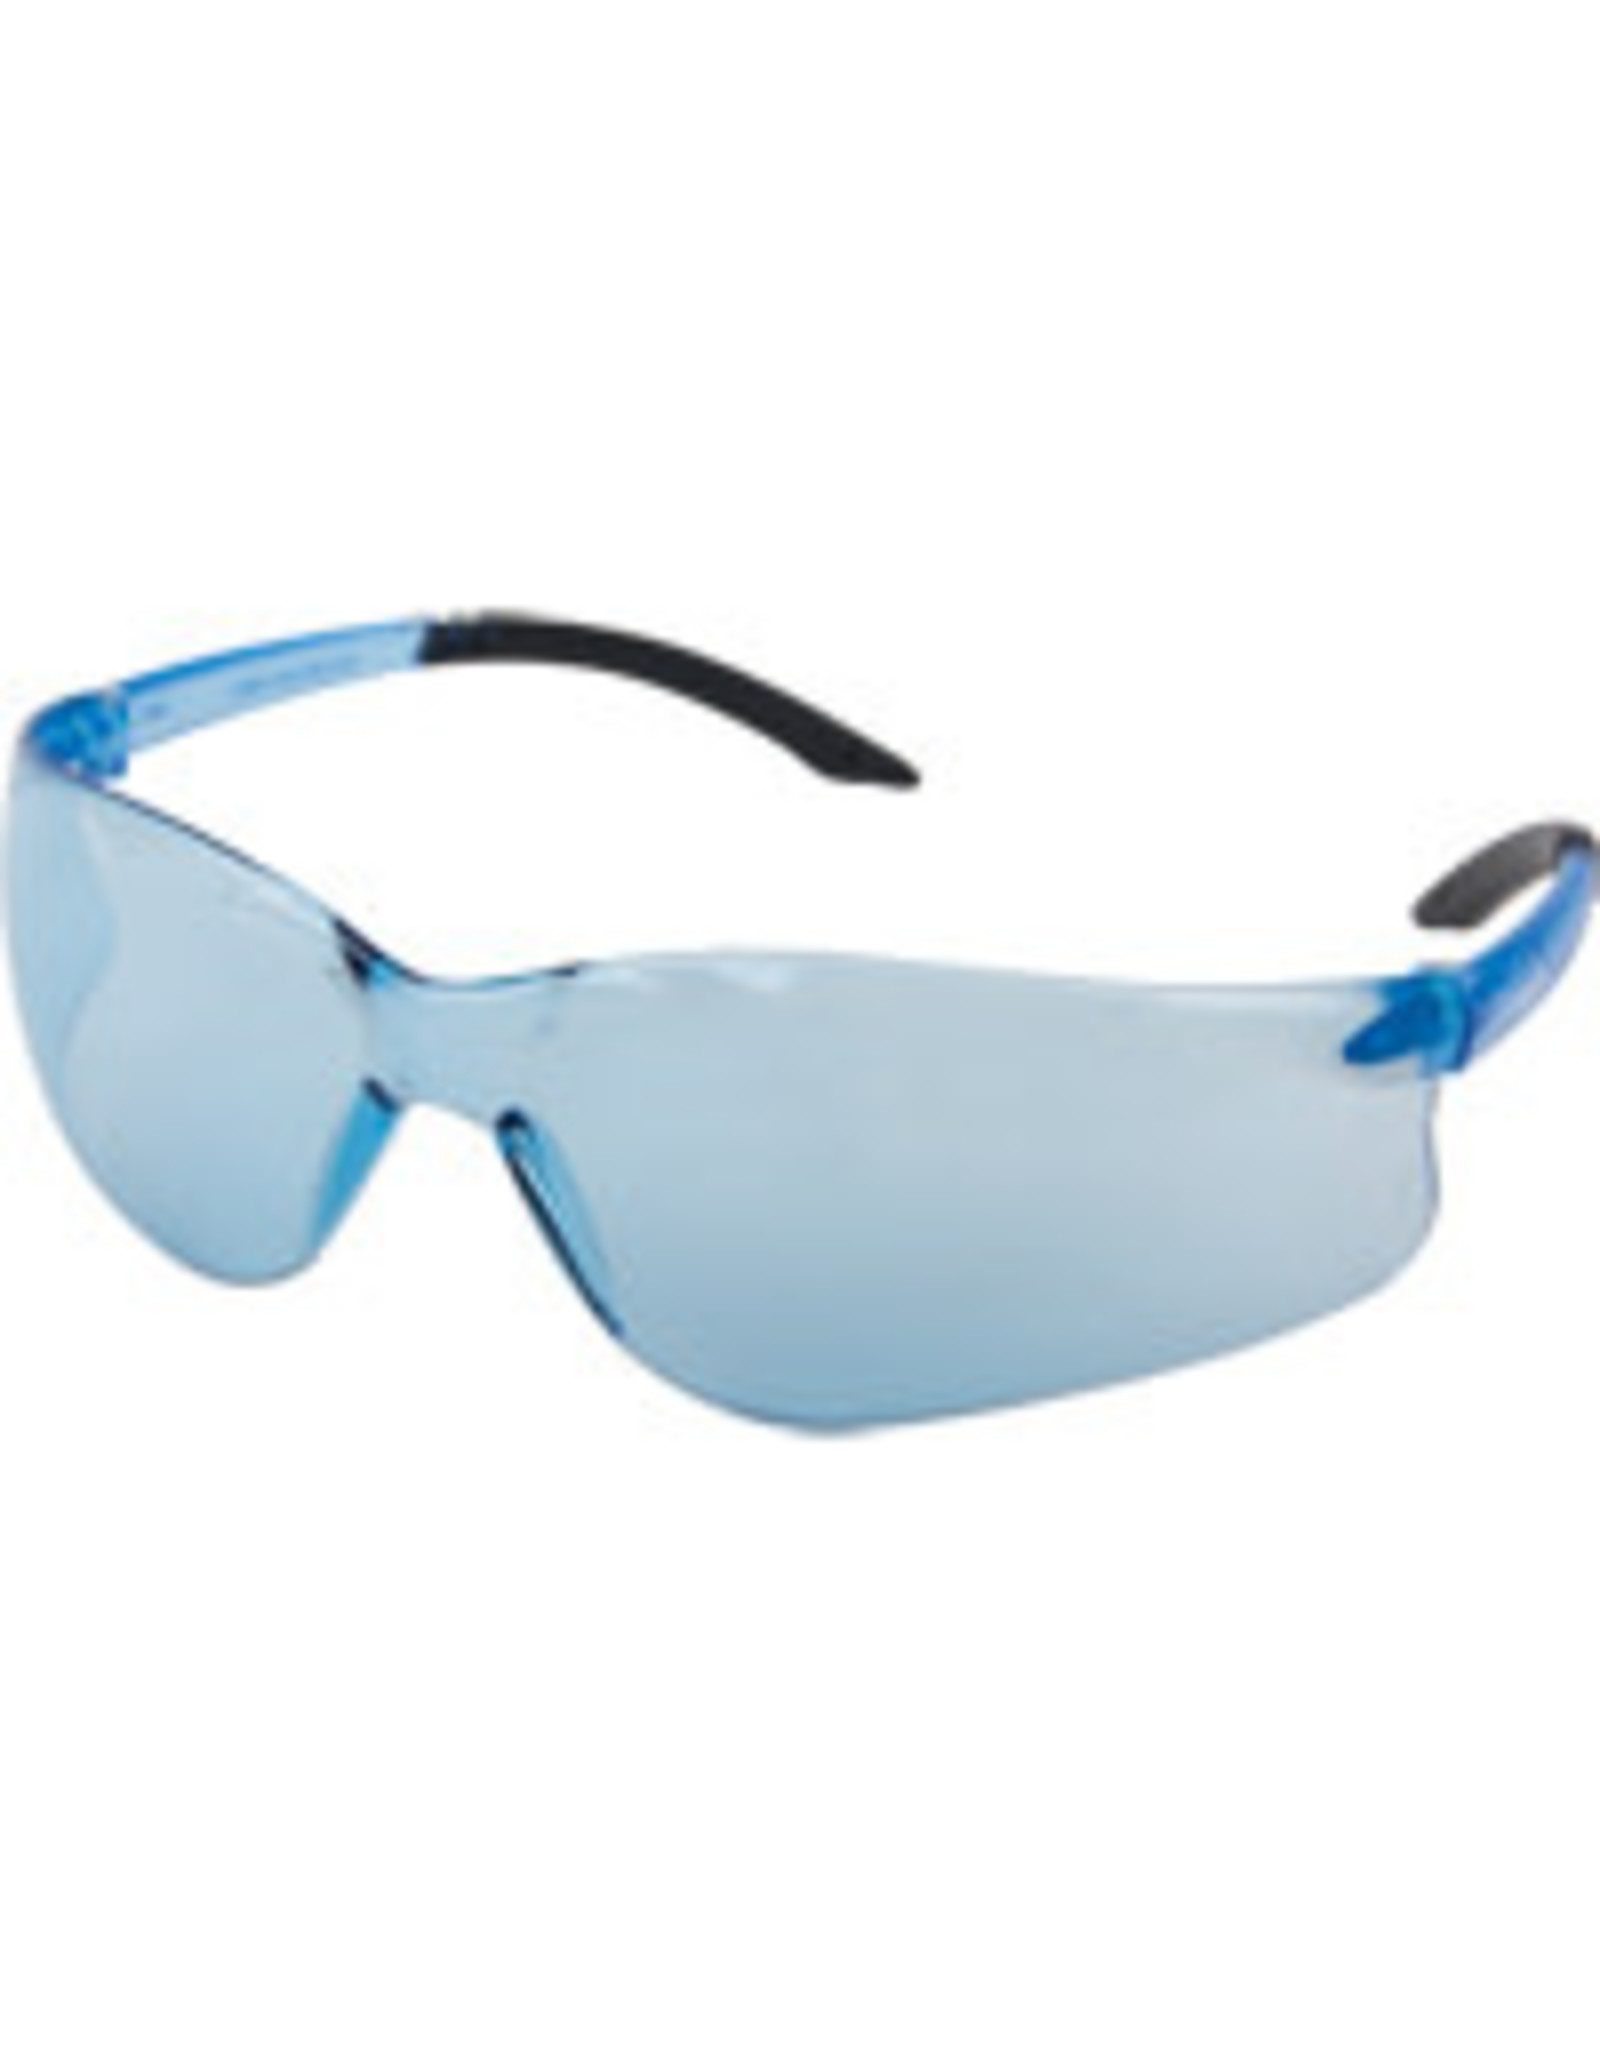 Zenith Z2400 CSA Safety Glasses, Blue Tine